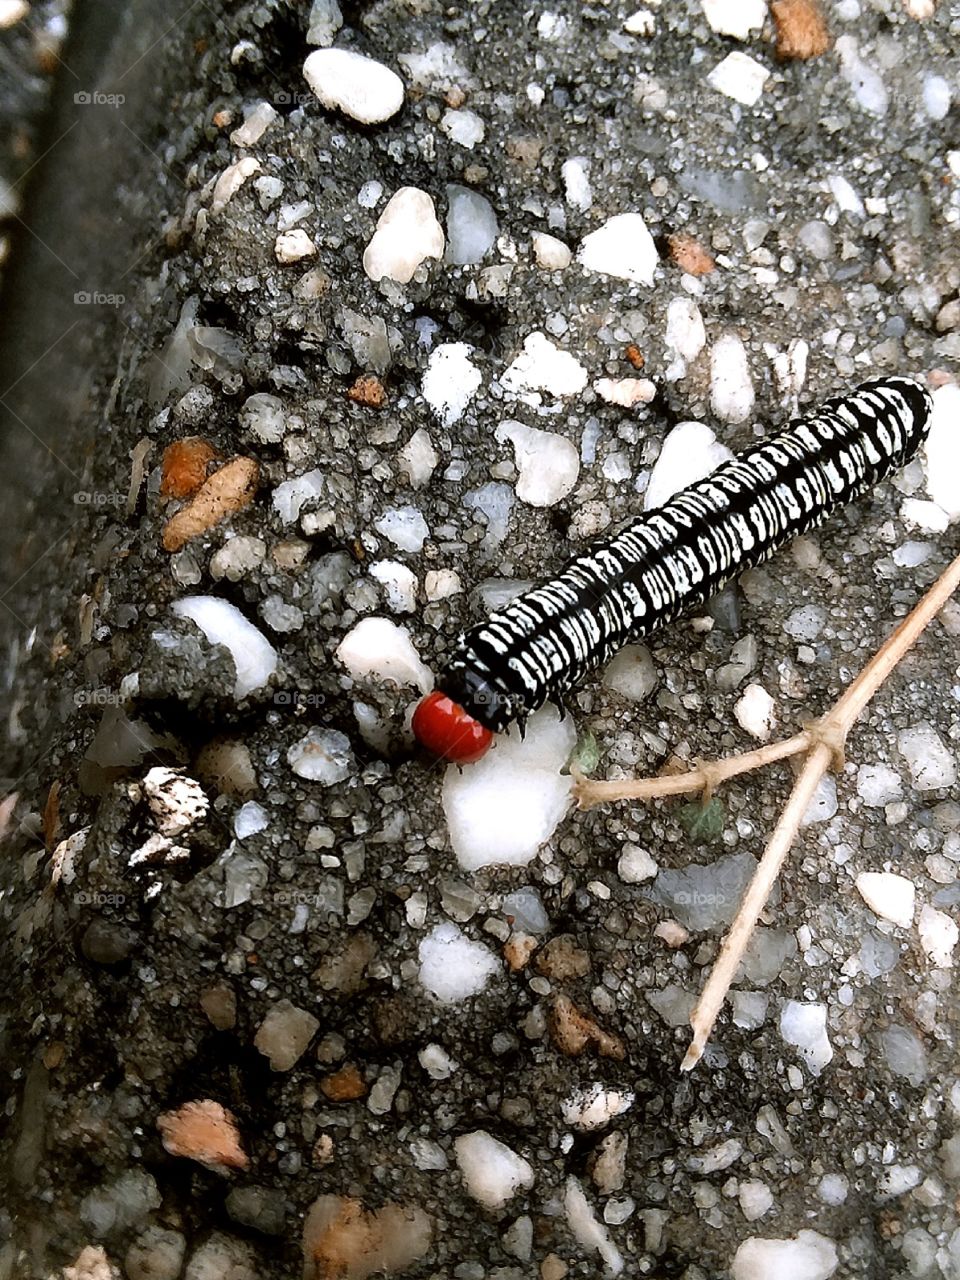 amazing caterpillar crawling along the wet asphalt